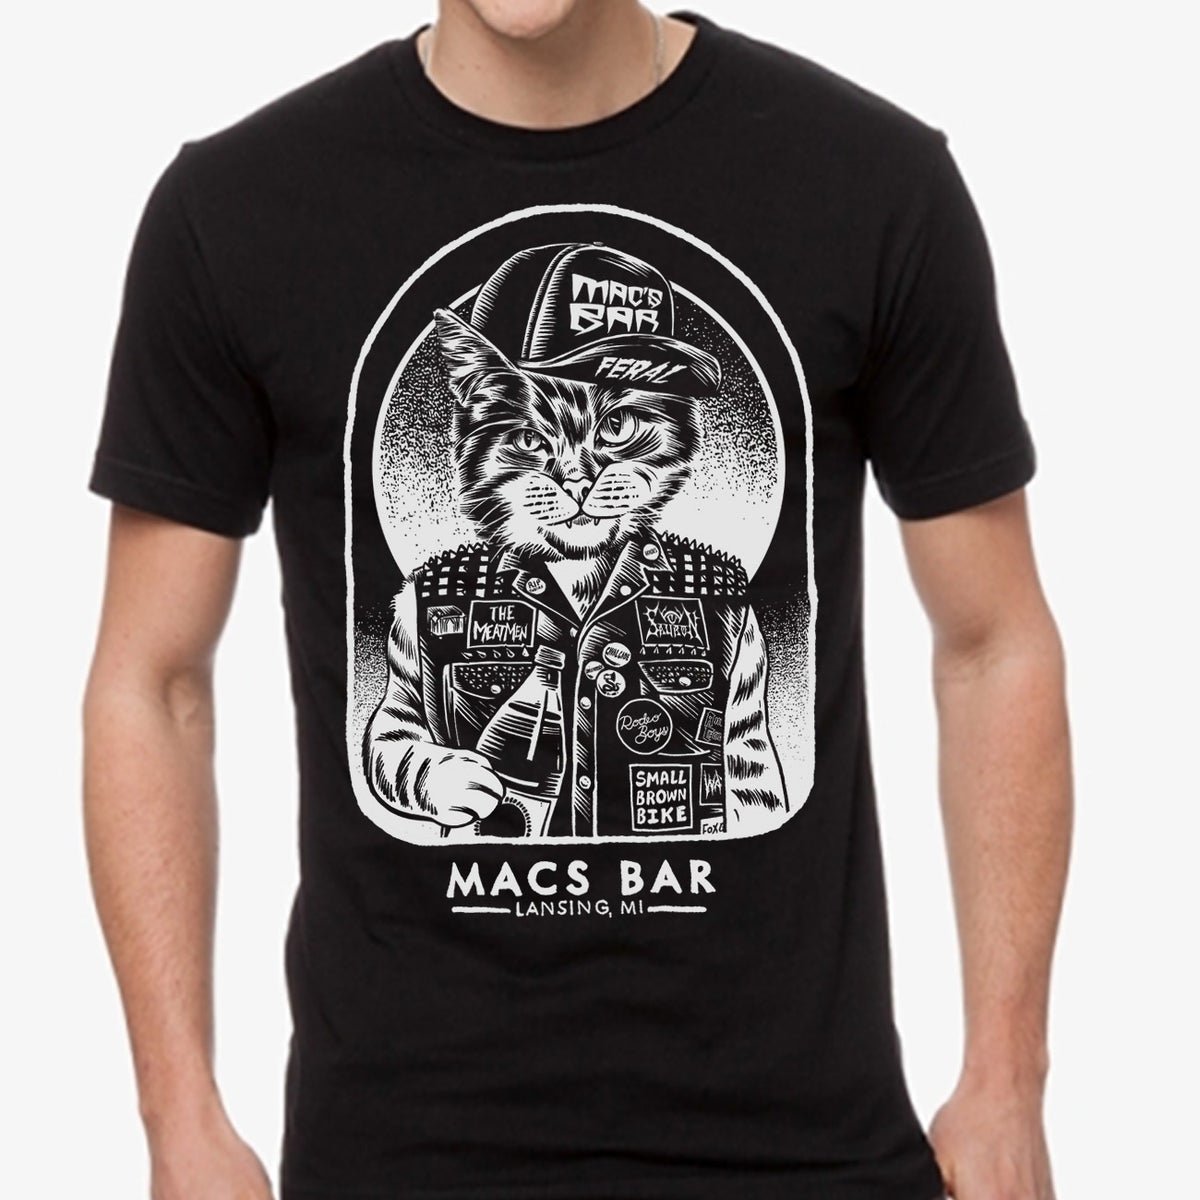 A Mac's Bar-themed T-shirt designed by Craig Horky.